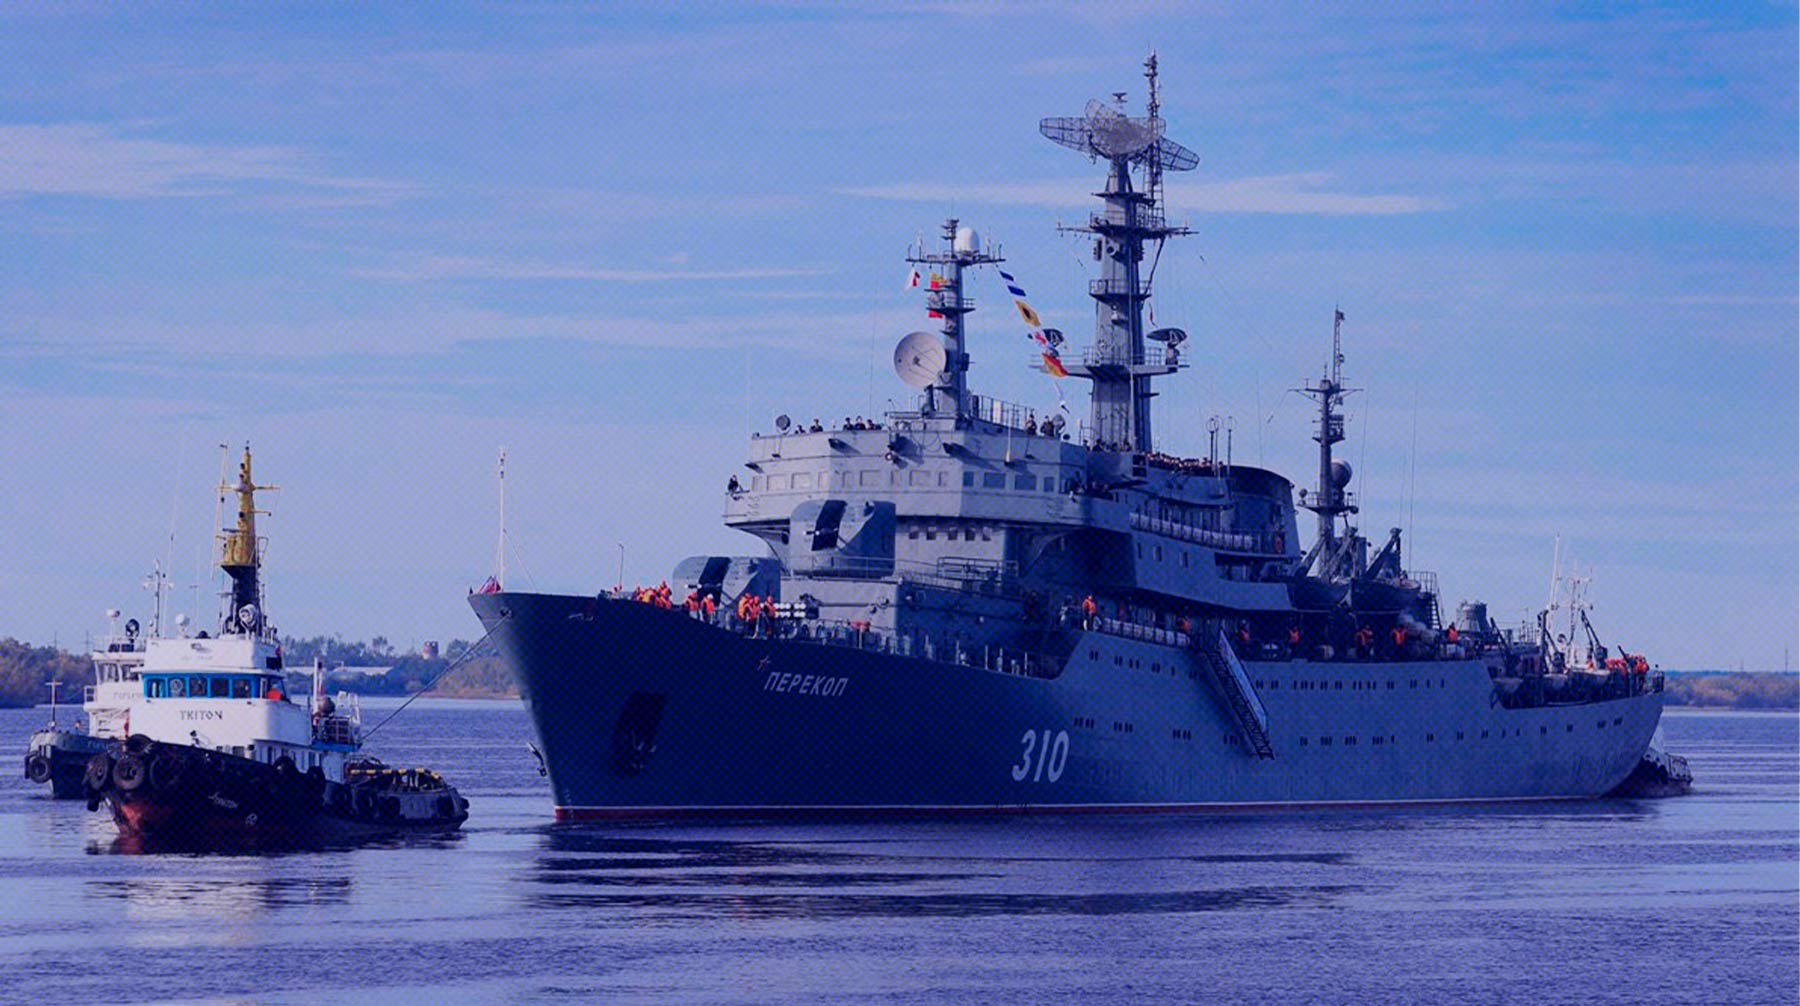 Экипаж судна своевременно обнаружил и уничтожил дрон Фото: Global Look Press / Министерство обороны РФ